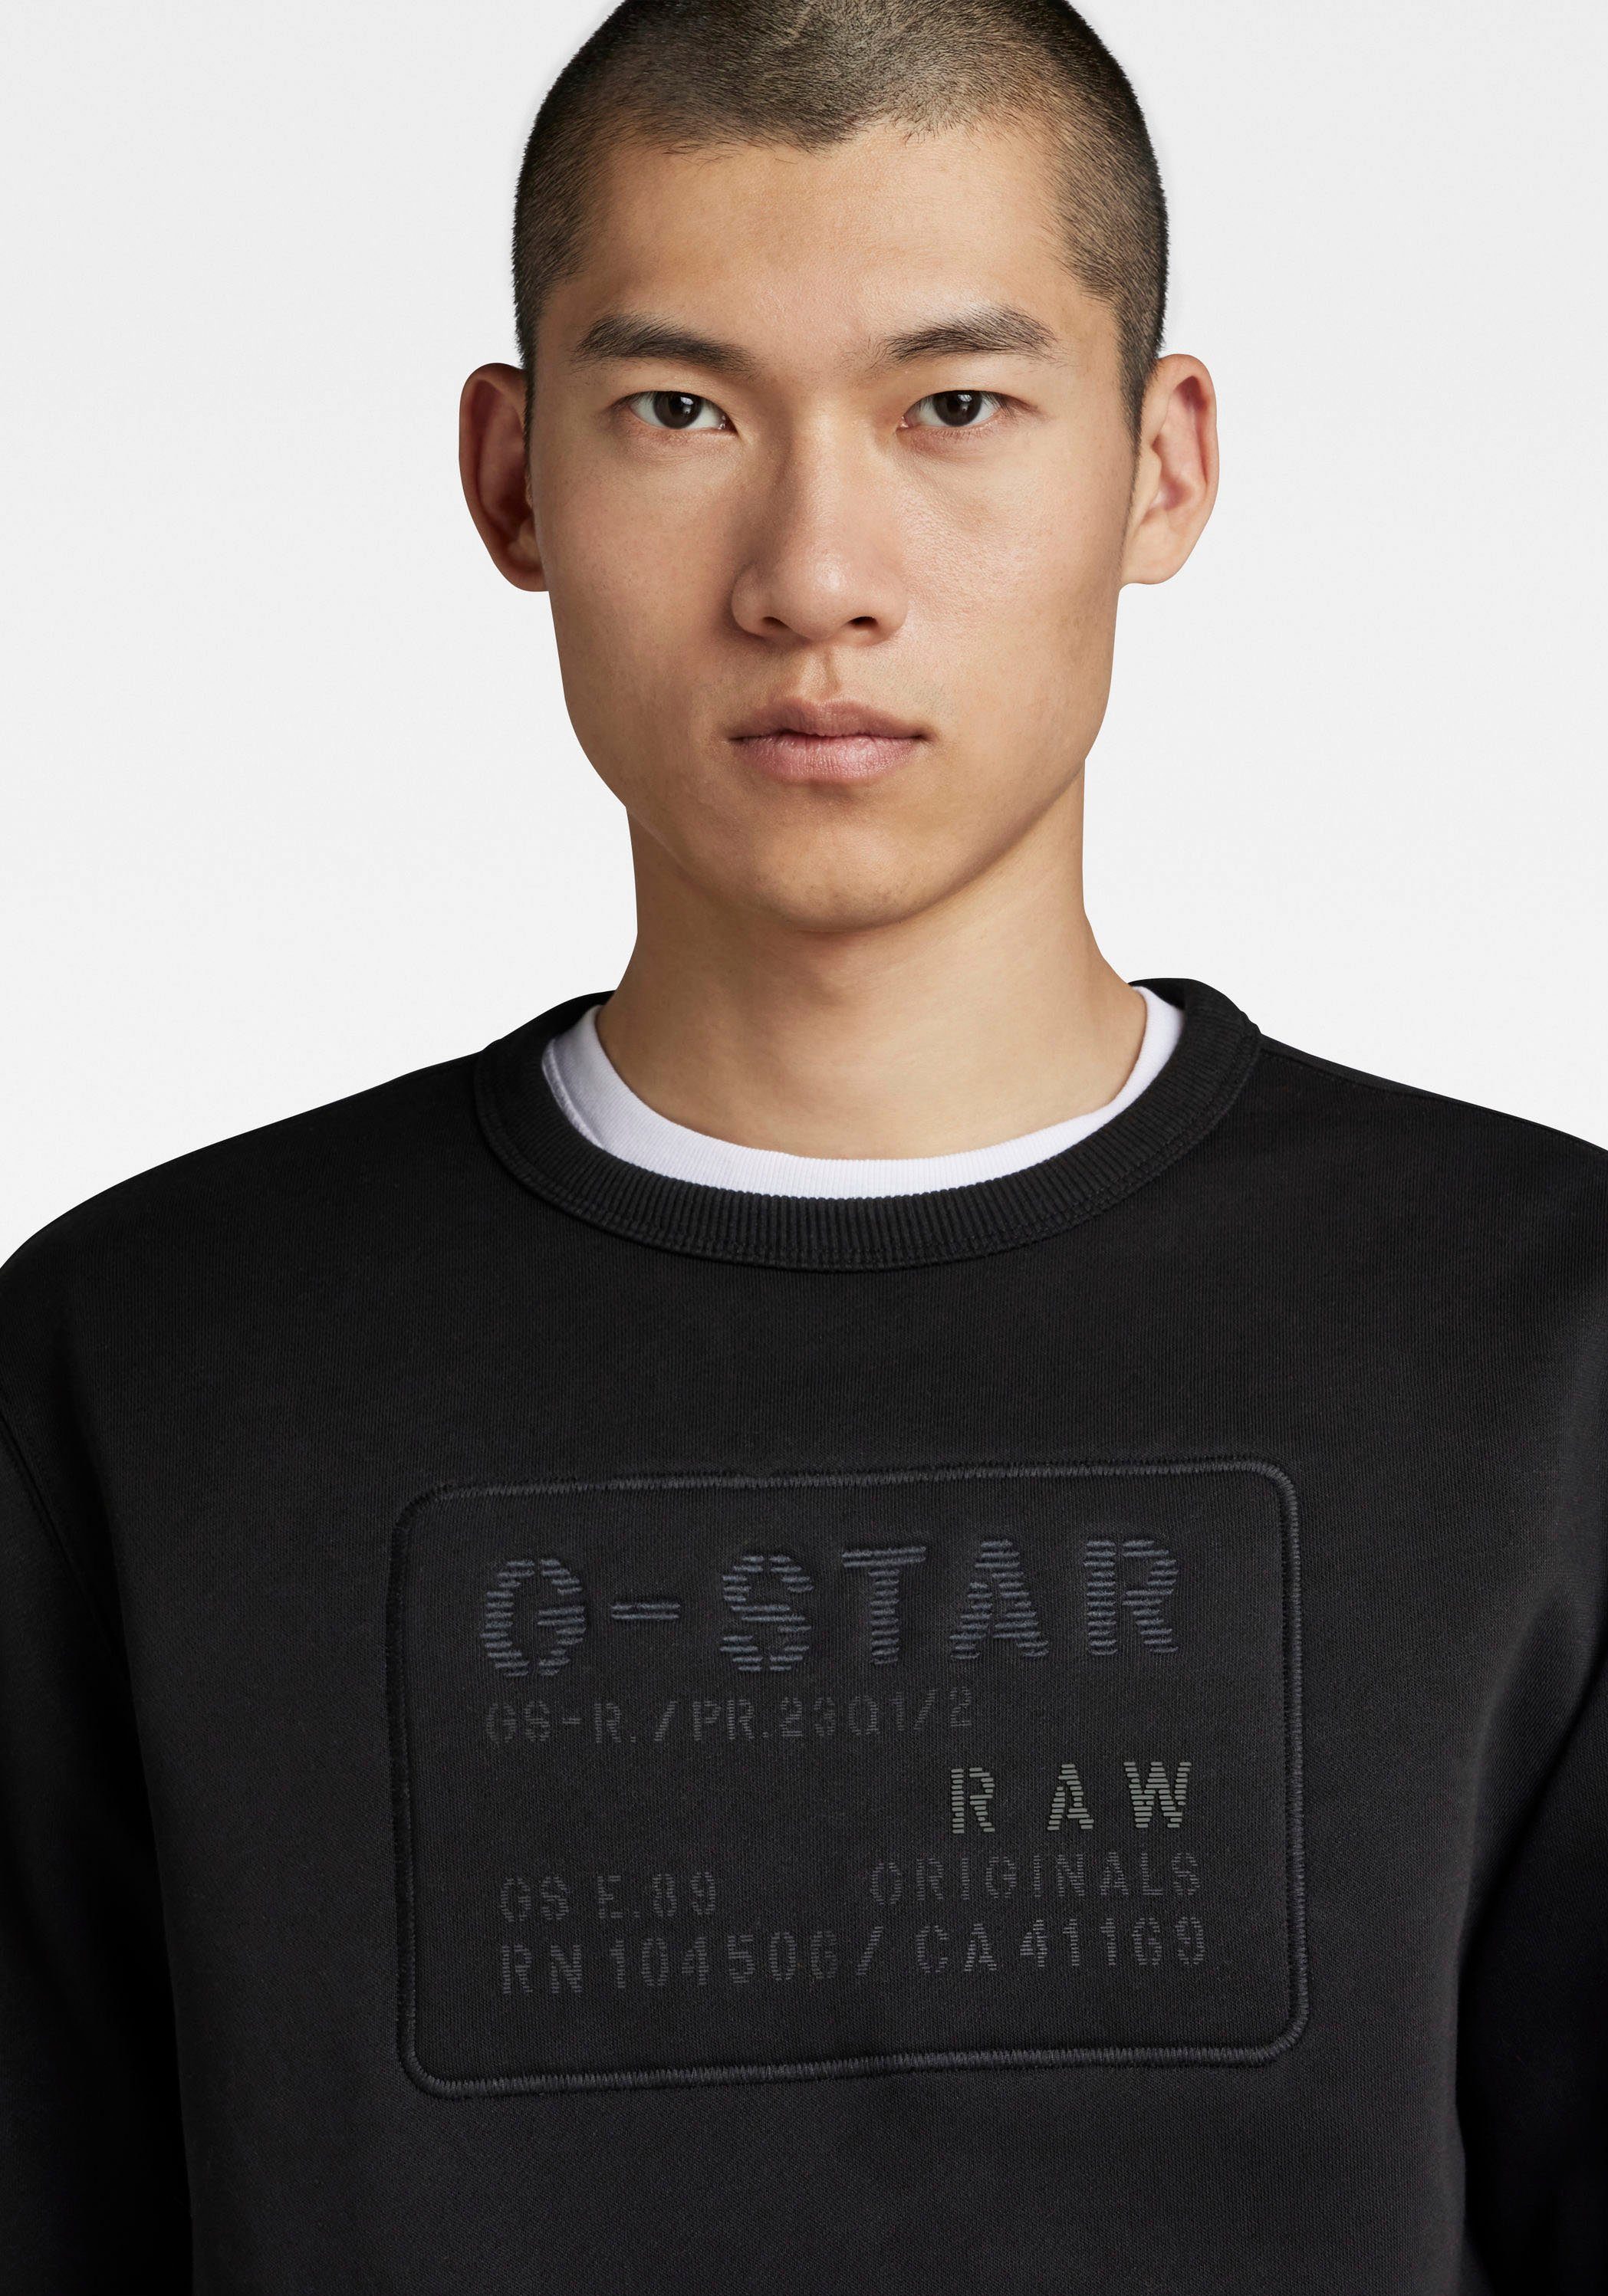 Dark Sweatshirt Sweatshirt G-Star Originals black RAW